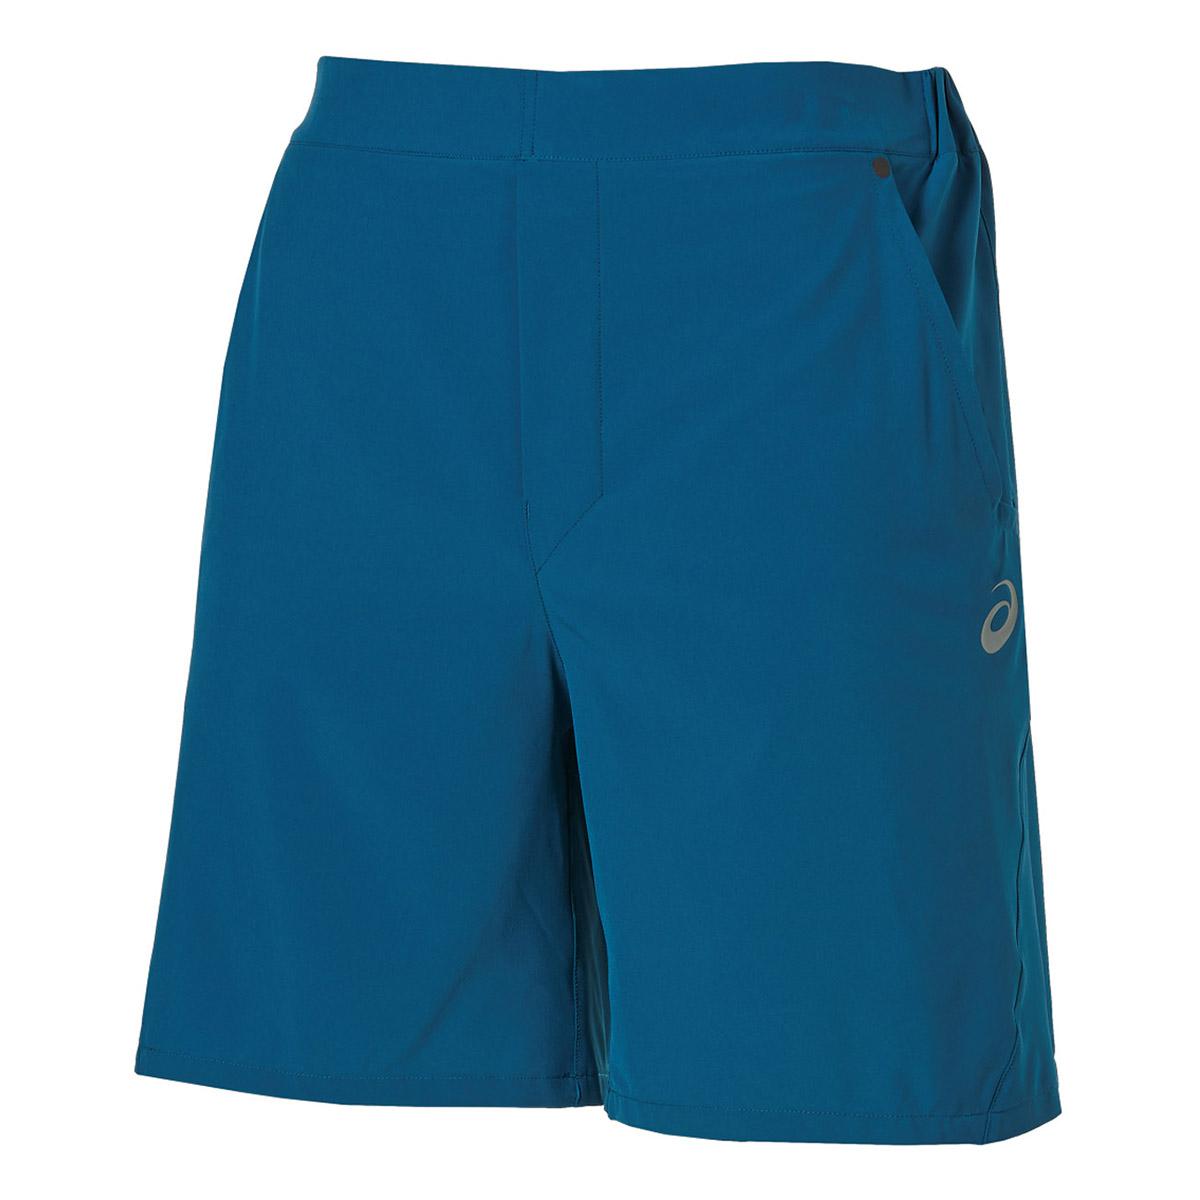 Asics Mens Athlete Tennis Shorts - Mosaic Blue - Tennisnuts.com